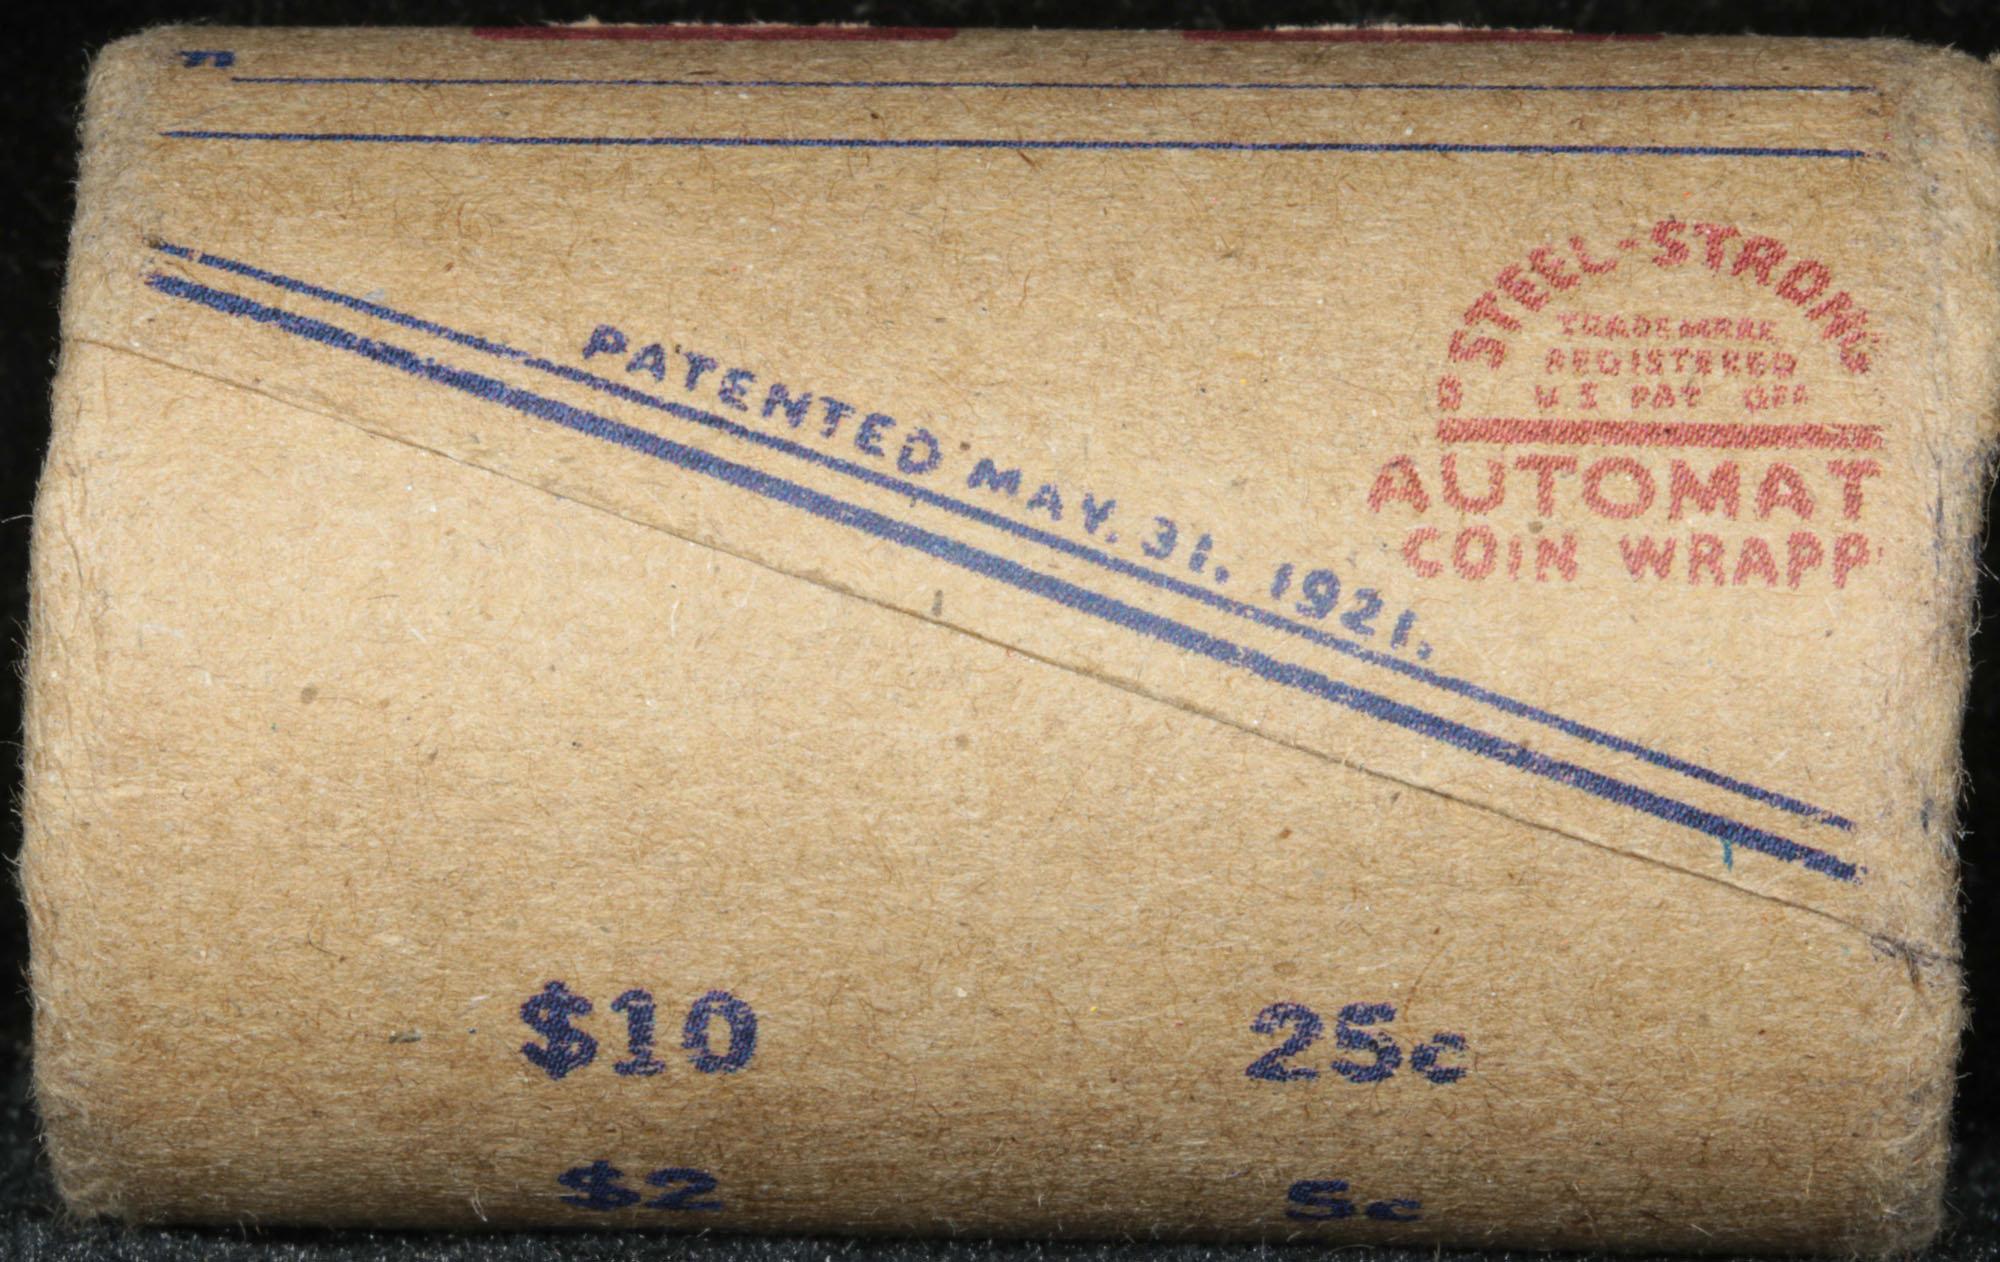 ***Auction Highlight*** Morgan dollar roll ends 1884 & 's', Better than average circ (fc)